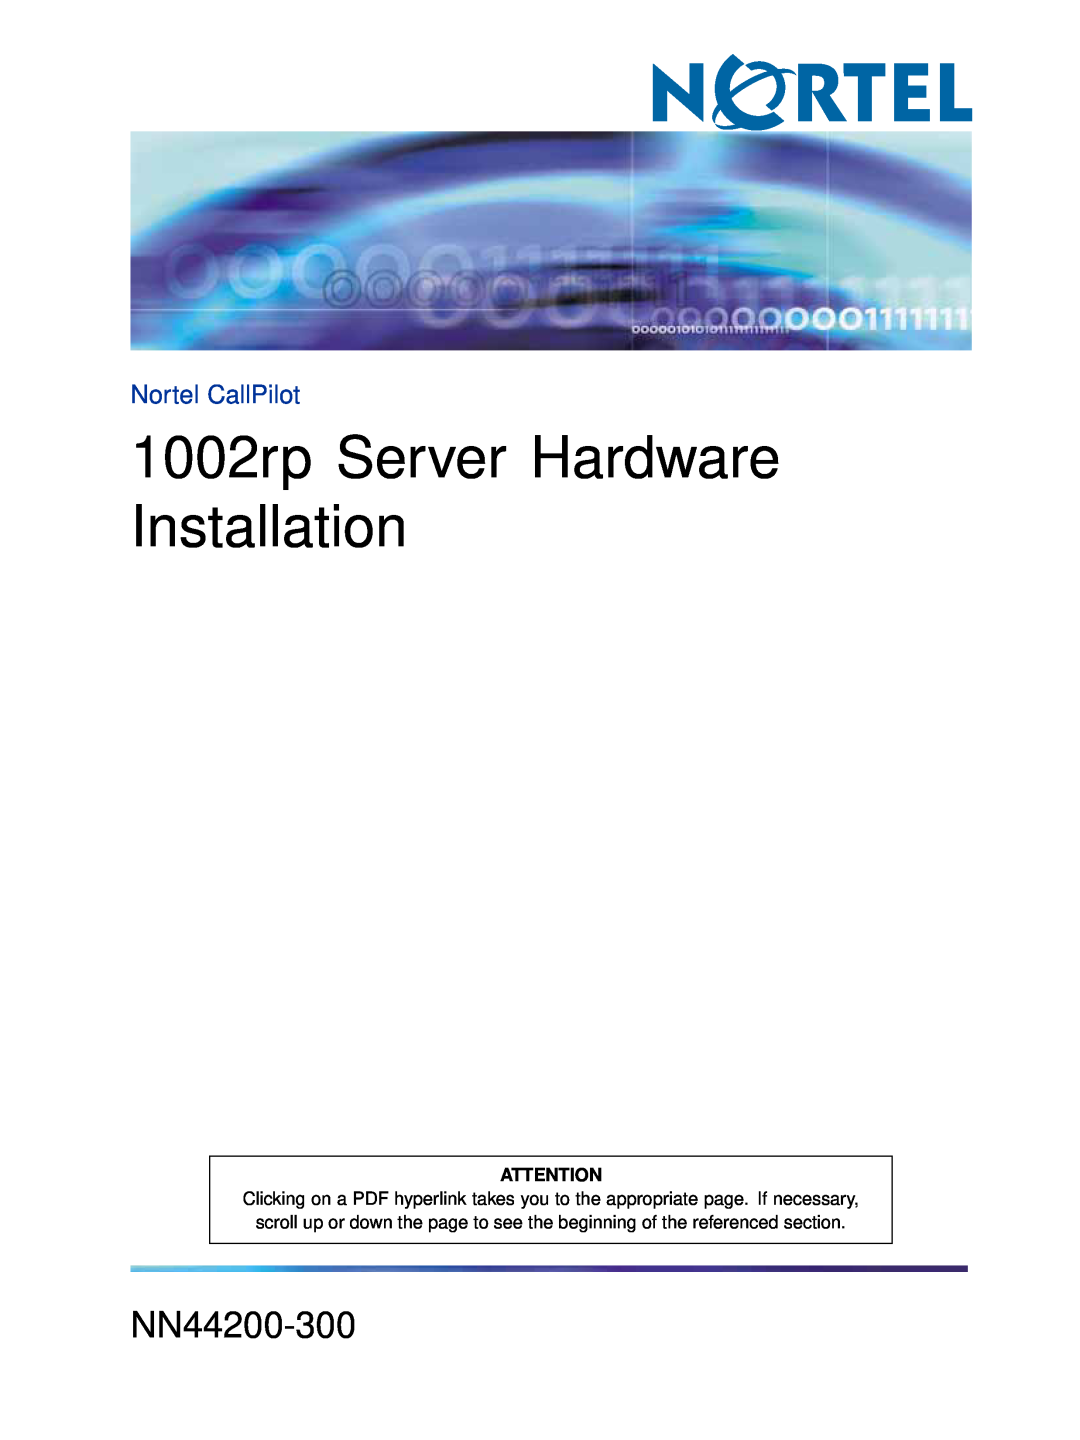 Nortel Networks NN44200-300 manual 1002rp Server Hardware Installation, Nortel CallPilot 